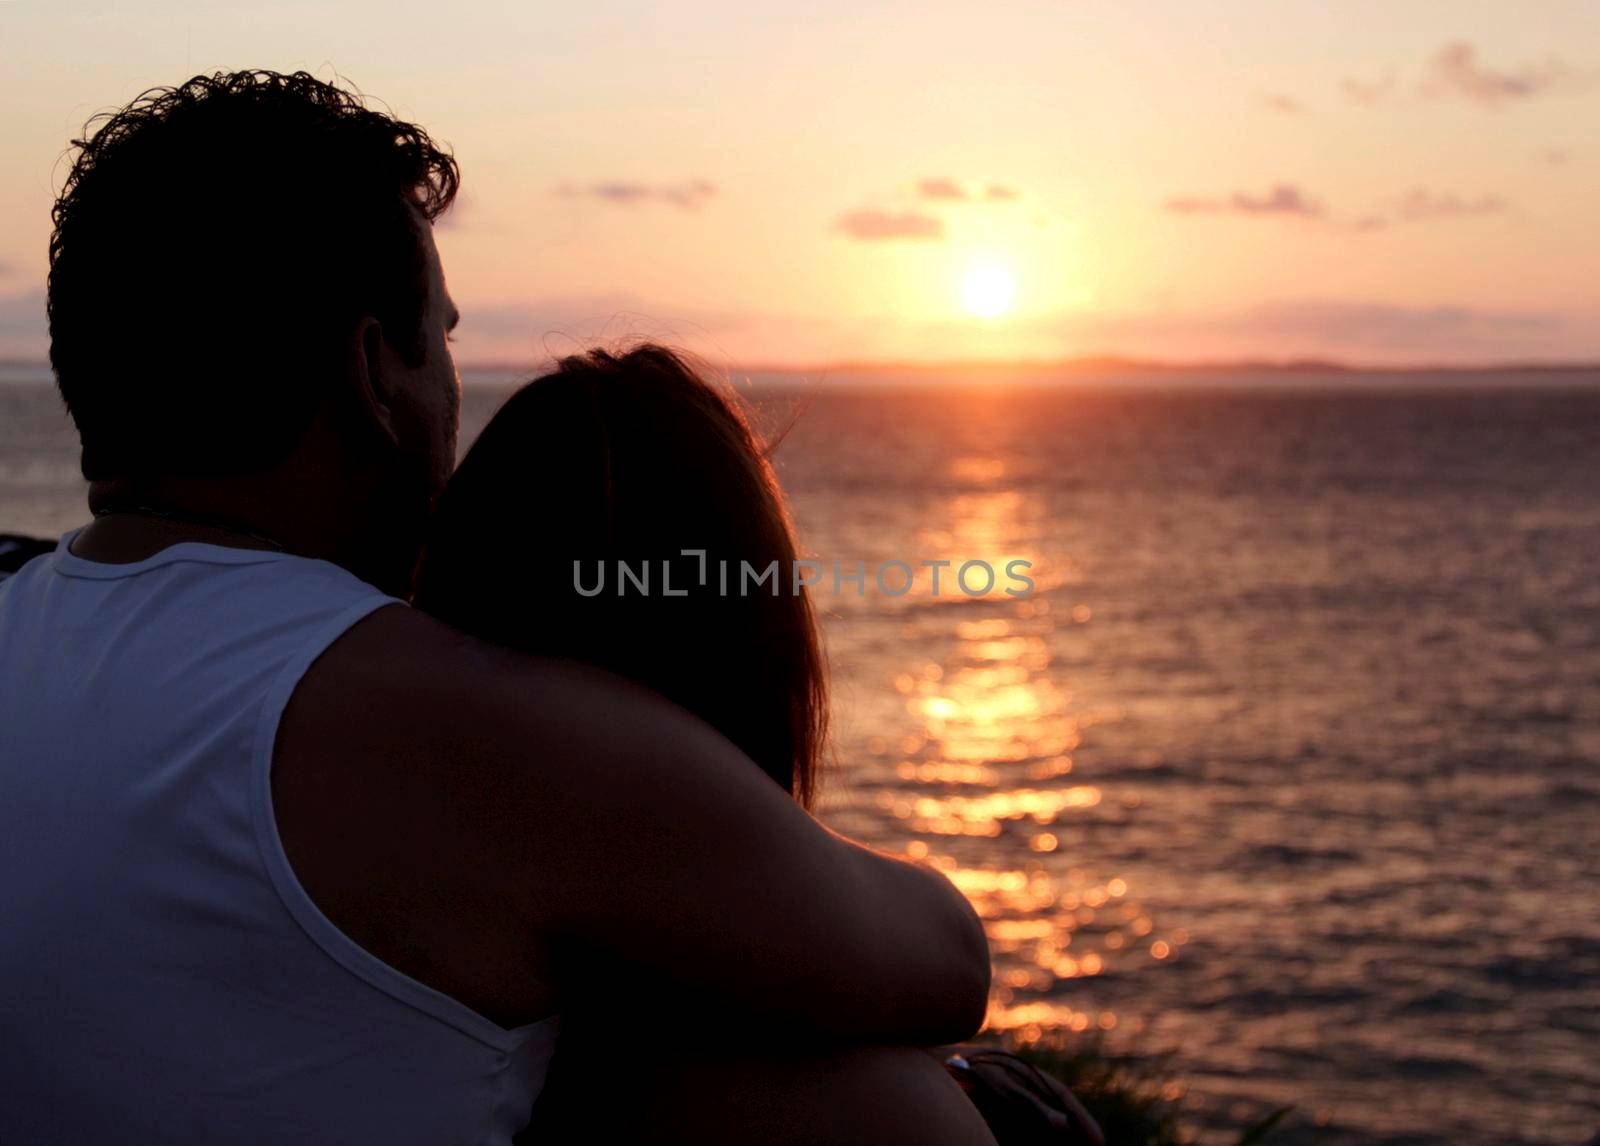 salvador, bahia / brazil - august 30, 2014: couple watching the sunset at Baia de Todos os Santos in the city of Salvador.